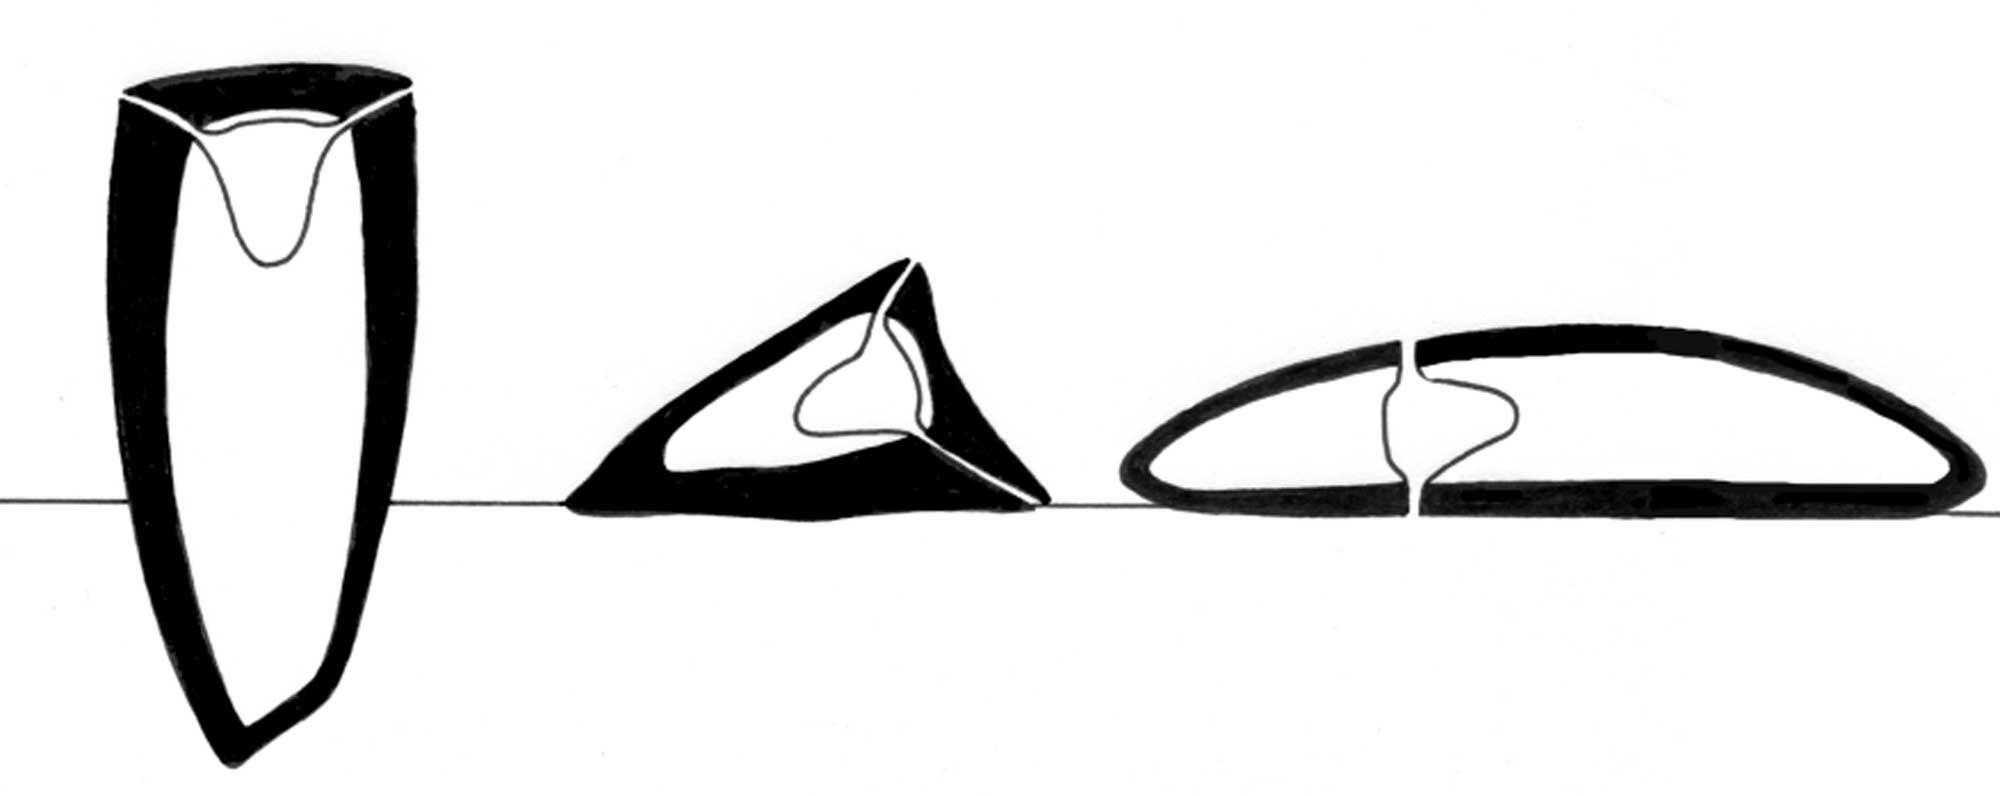 Illustration showing the three rudist morphotypes.